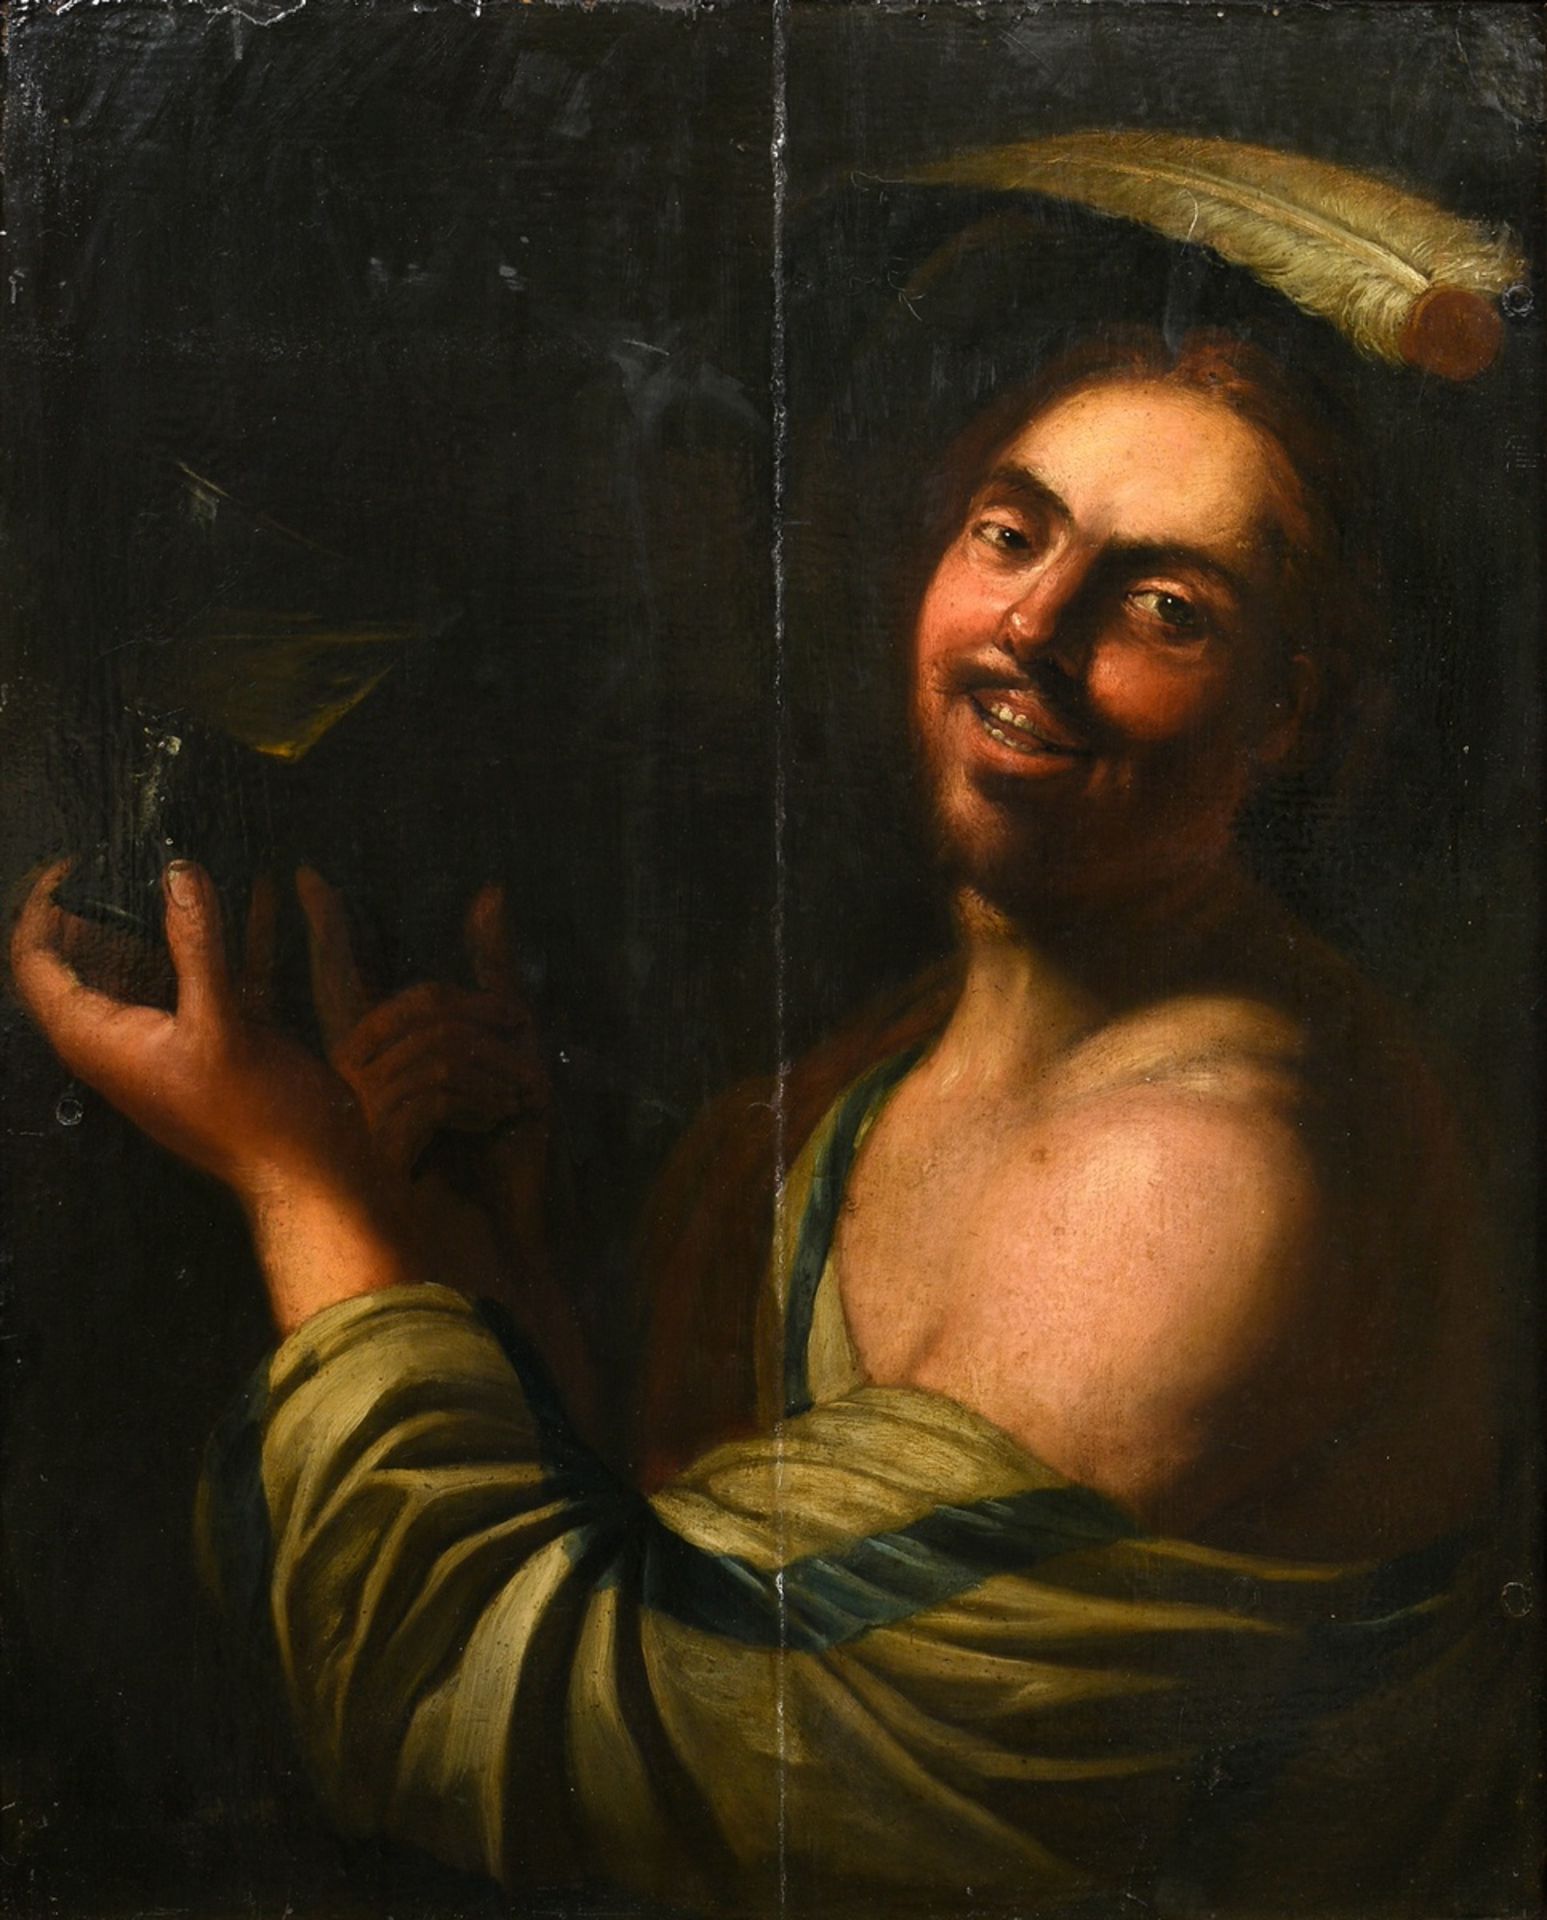 Bijlert, Jan Harmensz. van (1598-1671) "Drinking Man" after Gerrit van Honthorst, oil/wood, verso o